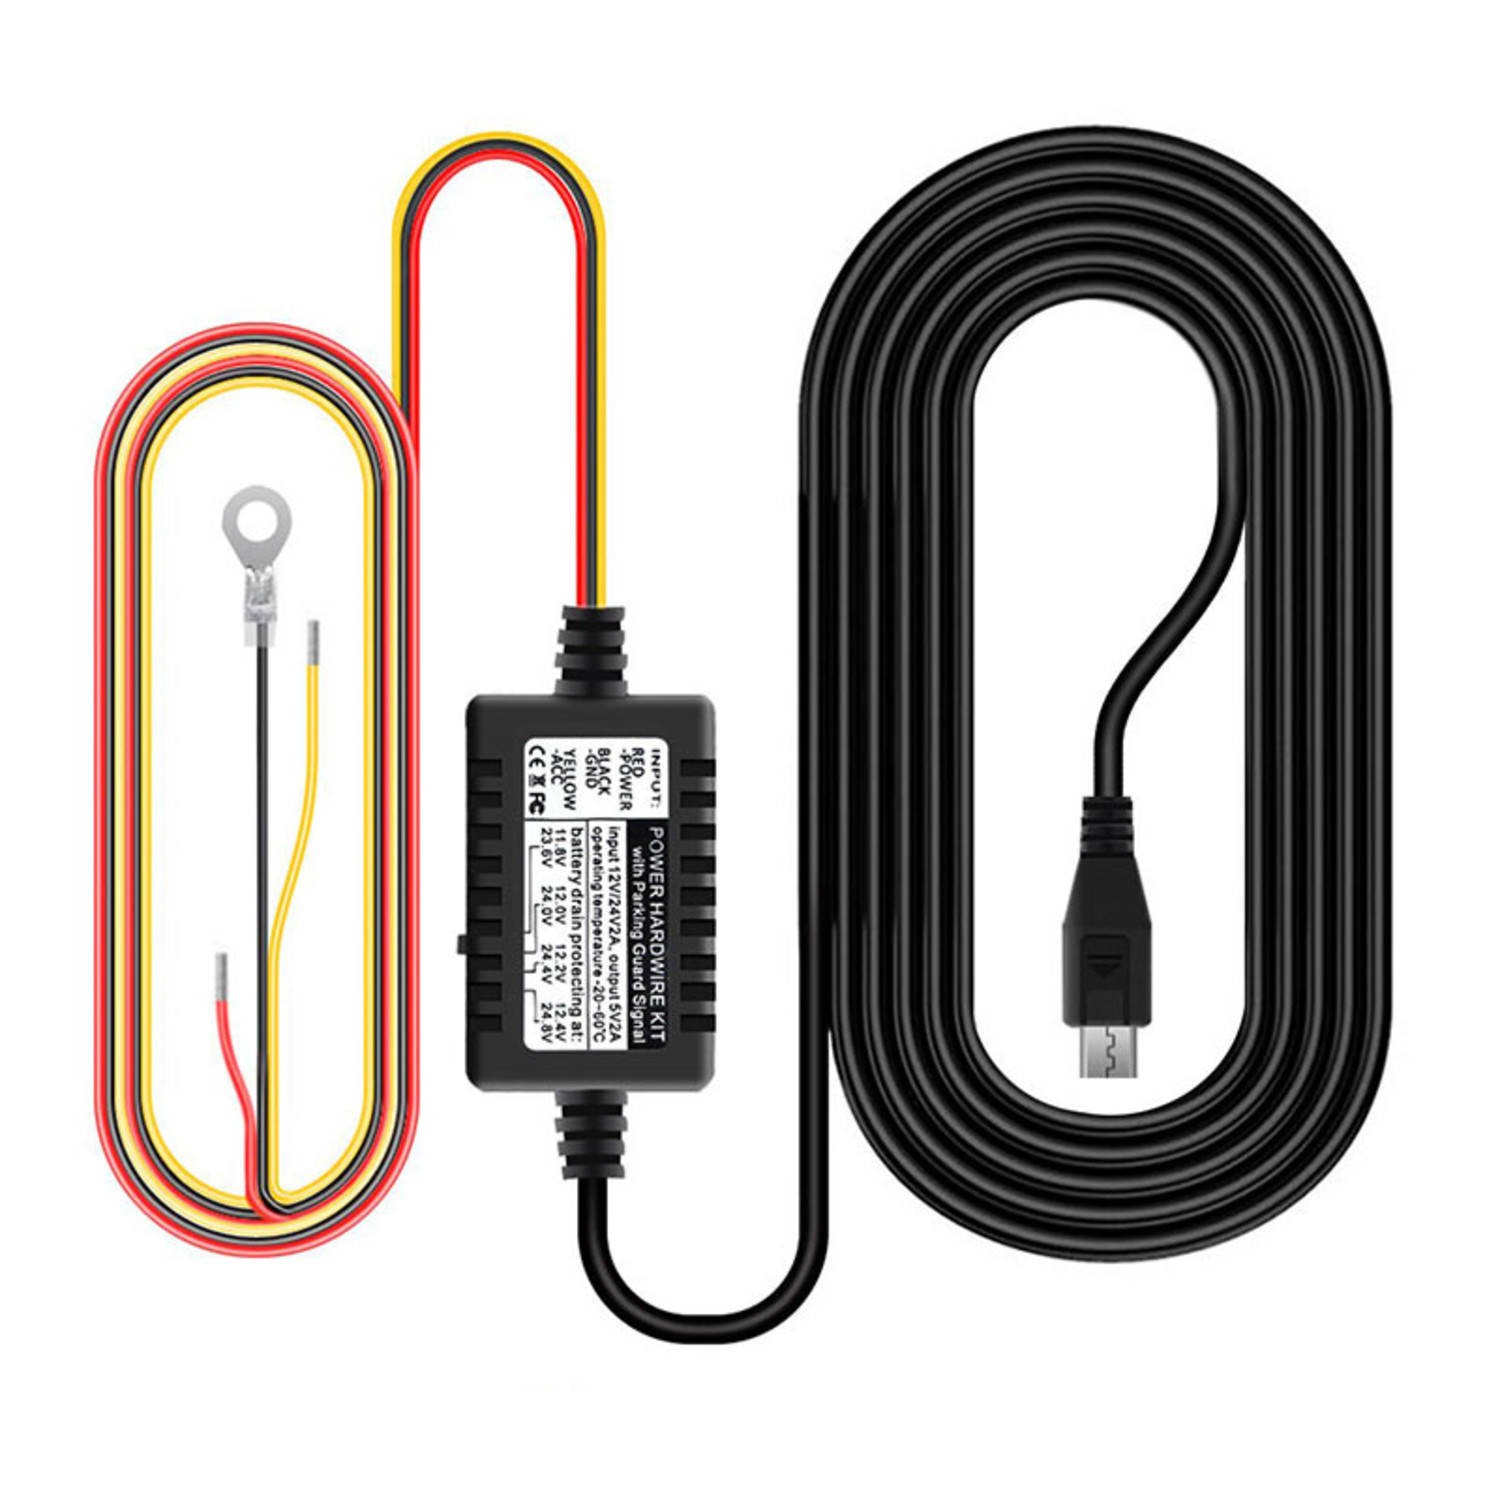 Hardwire kit Micro USB 3-wire - Dashcamdeal